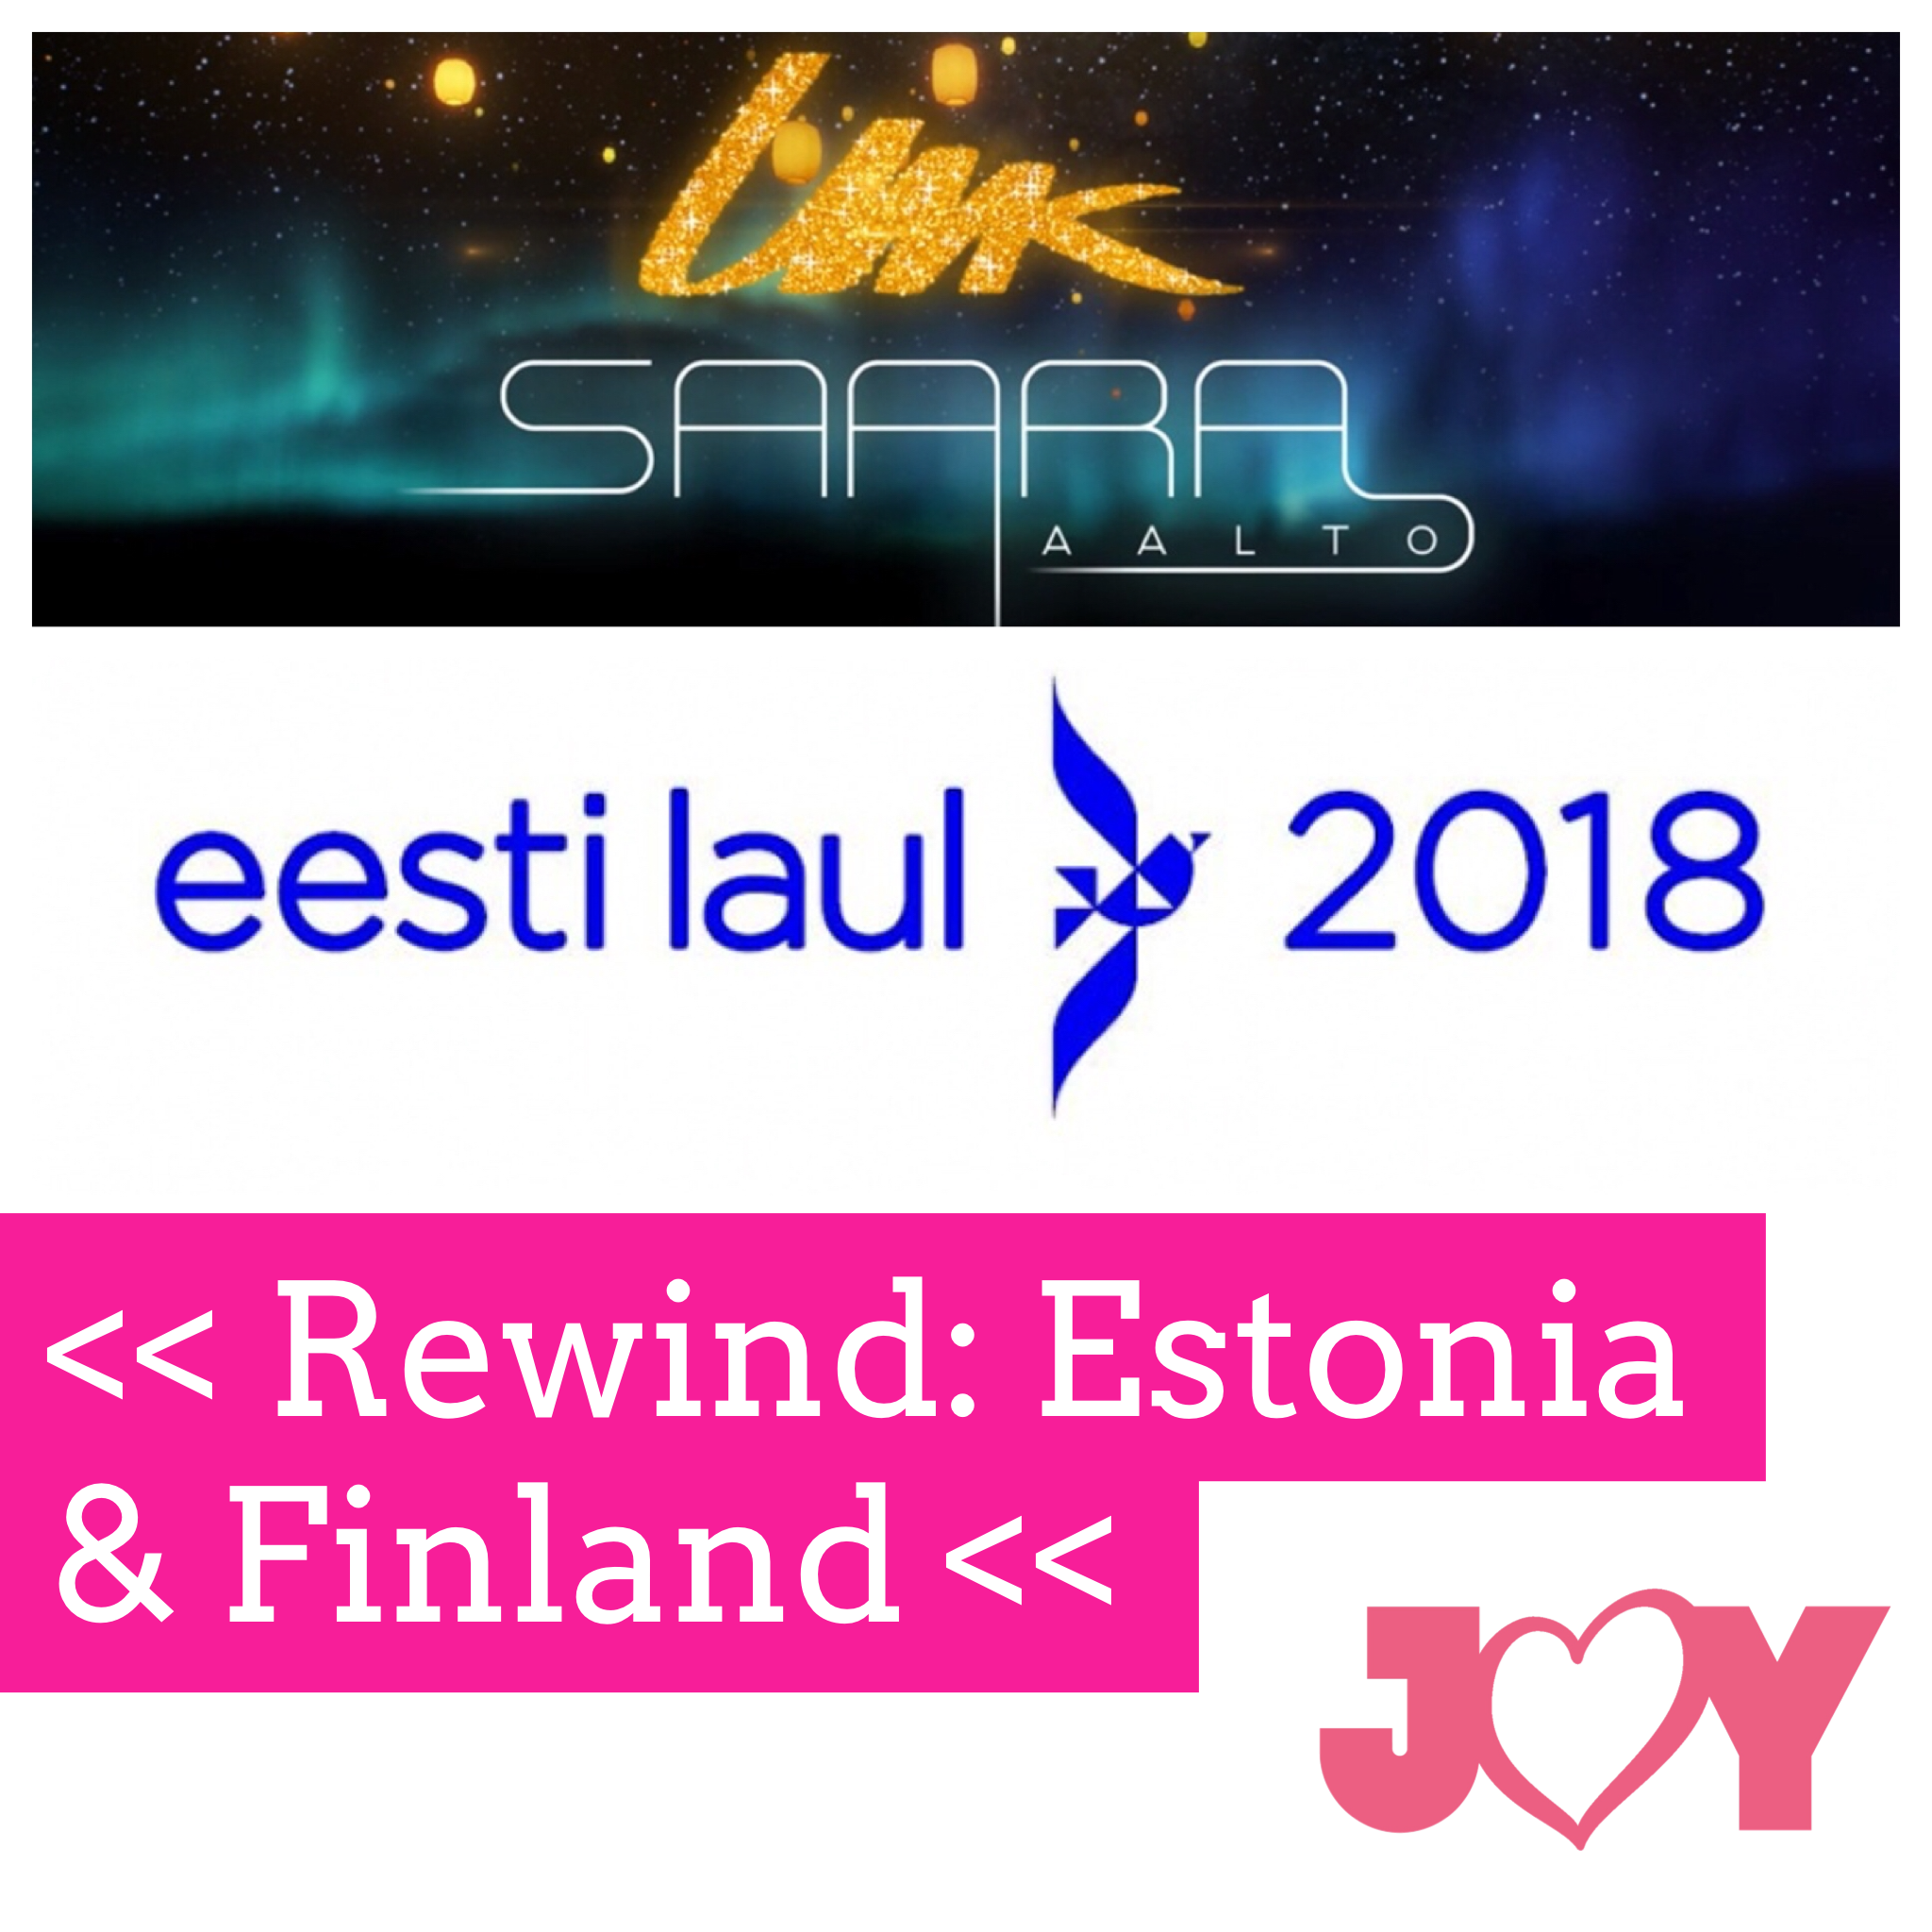 A little bit o’ Eesti and Suomi: Recapping Estonia and Finland